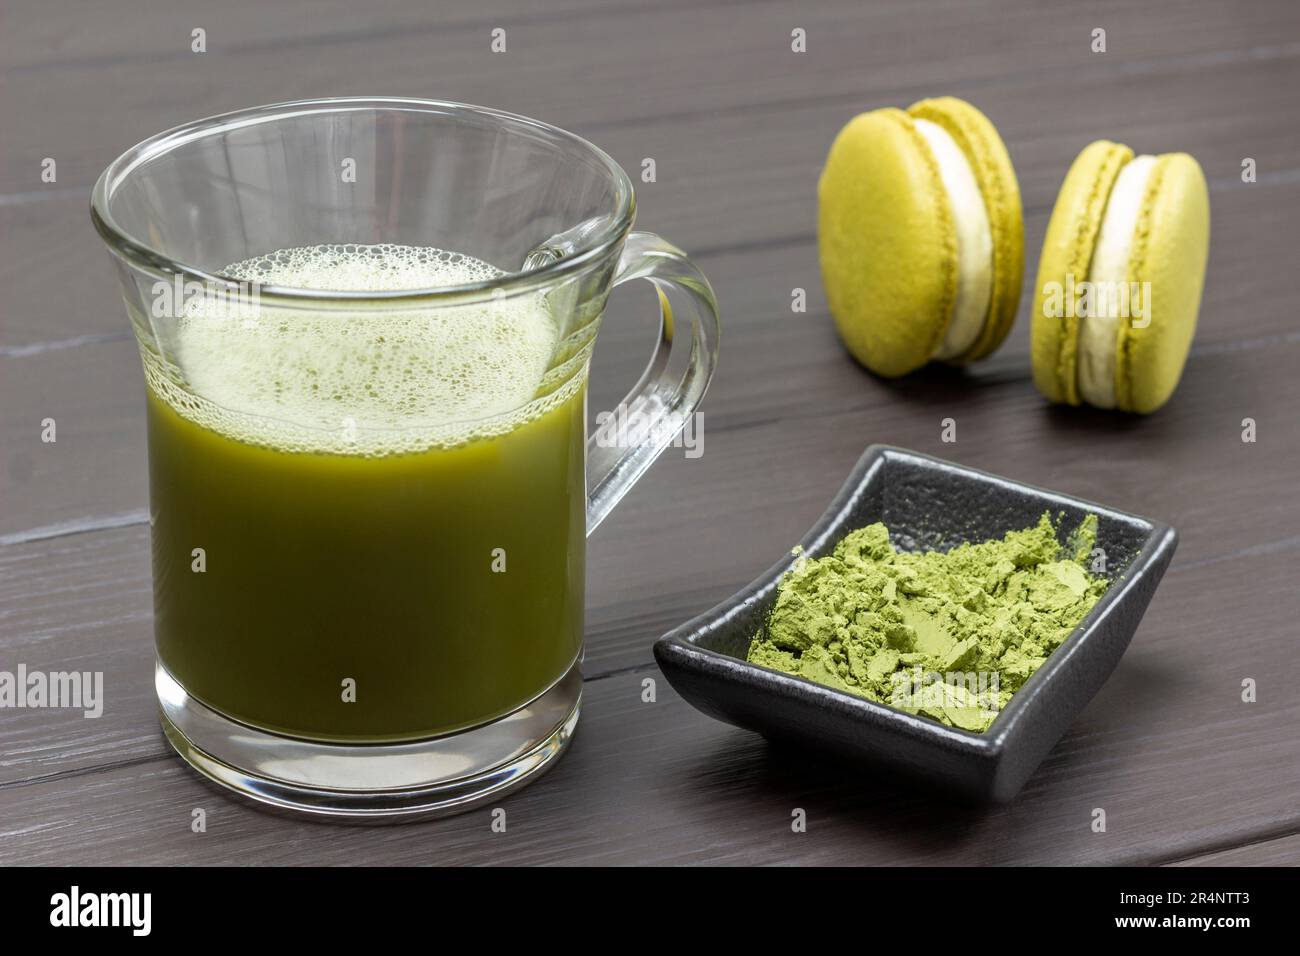 Mug of matcha green tea. Bowl with matcha powder and two macaroni cakes. Dark wooden background. Stock Photo